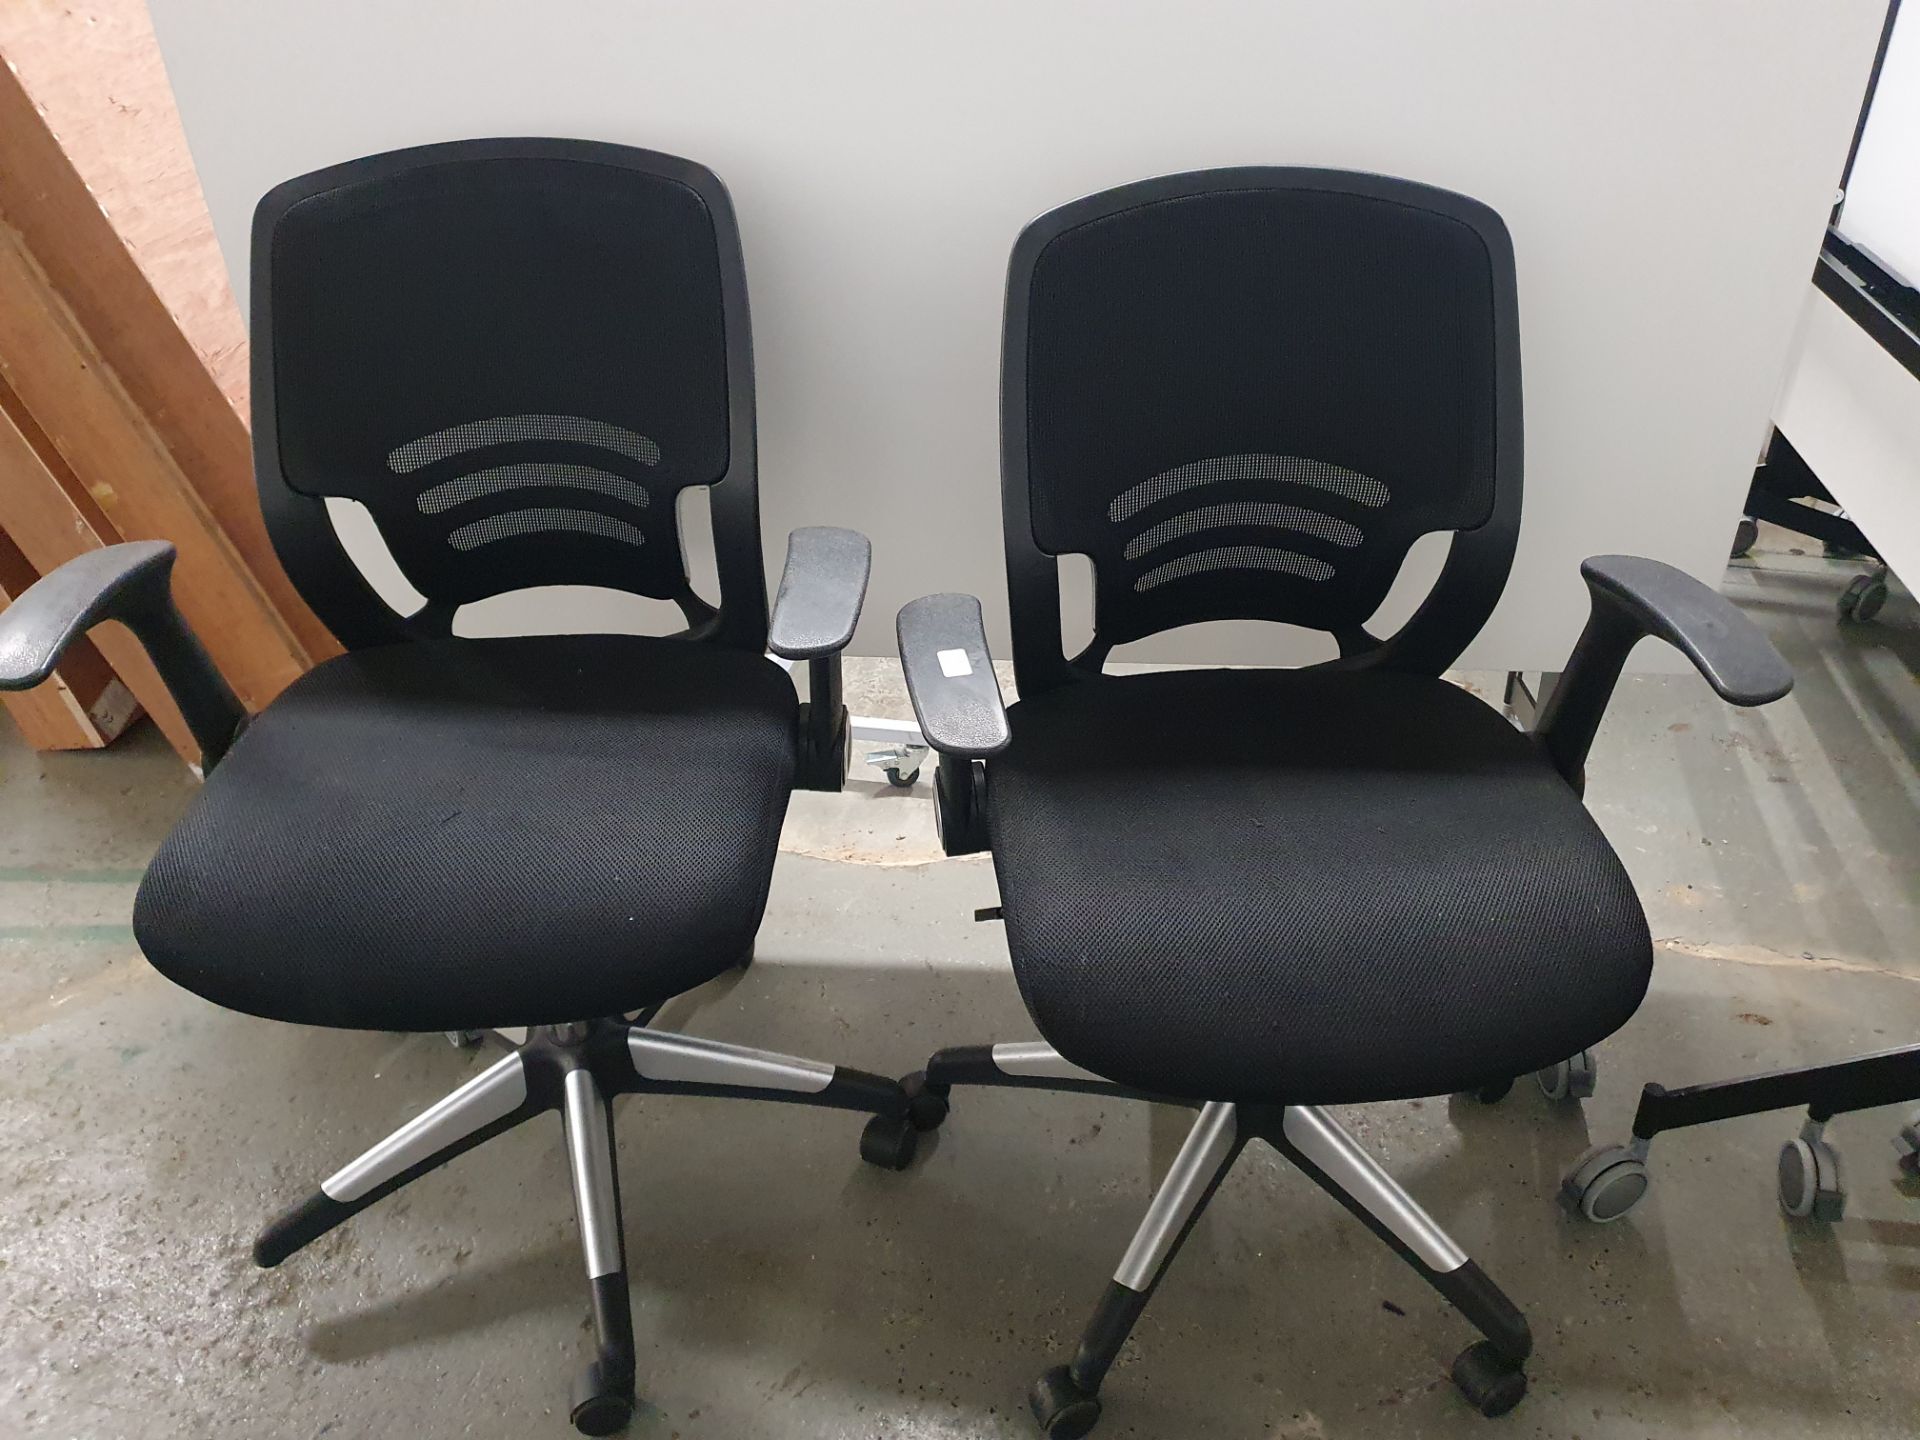 * 2 x premium ergonomic office chairs